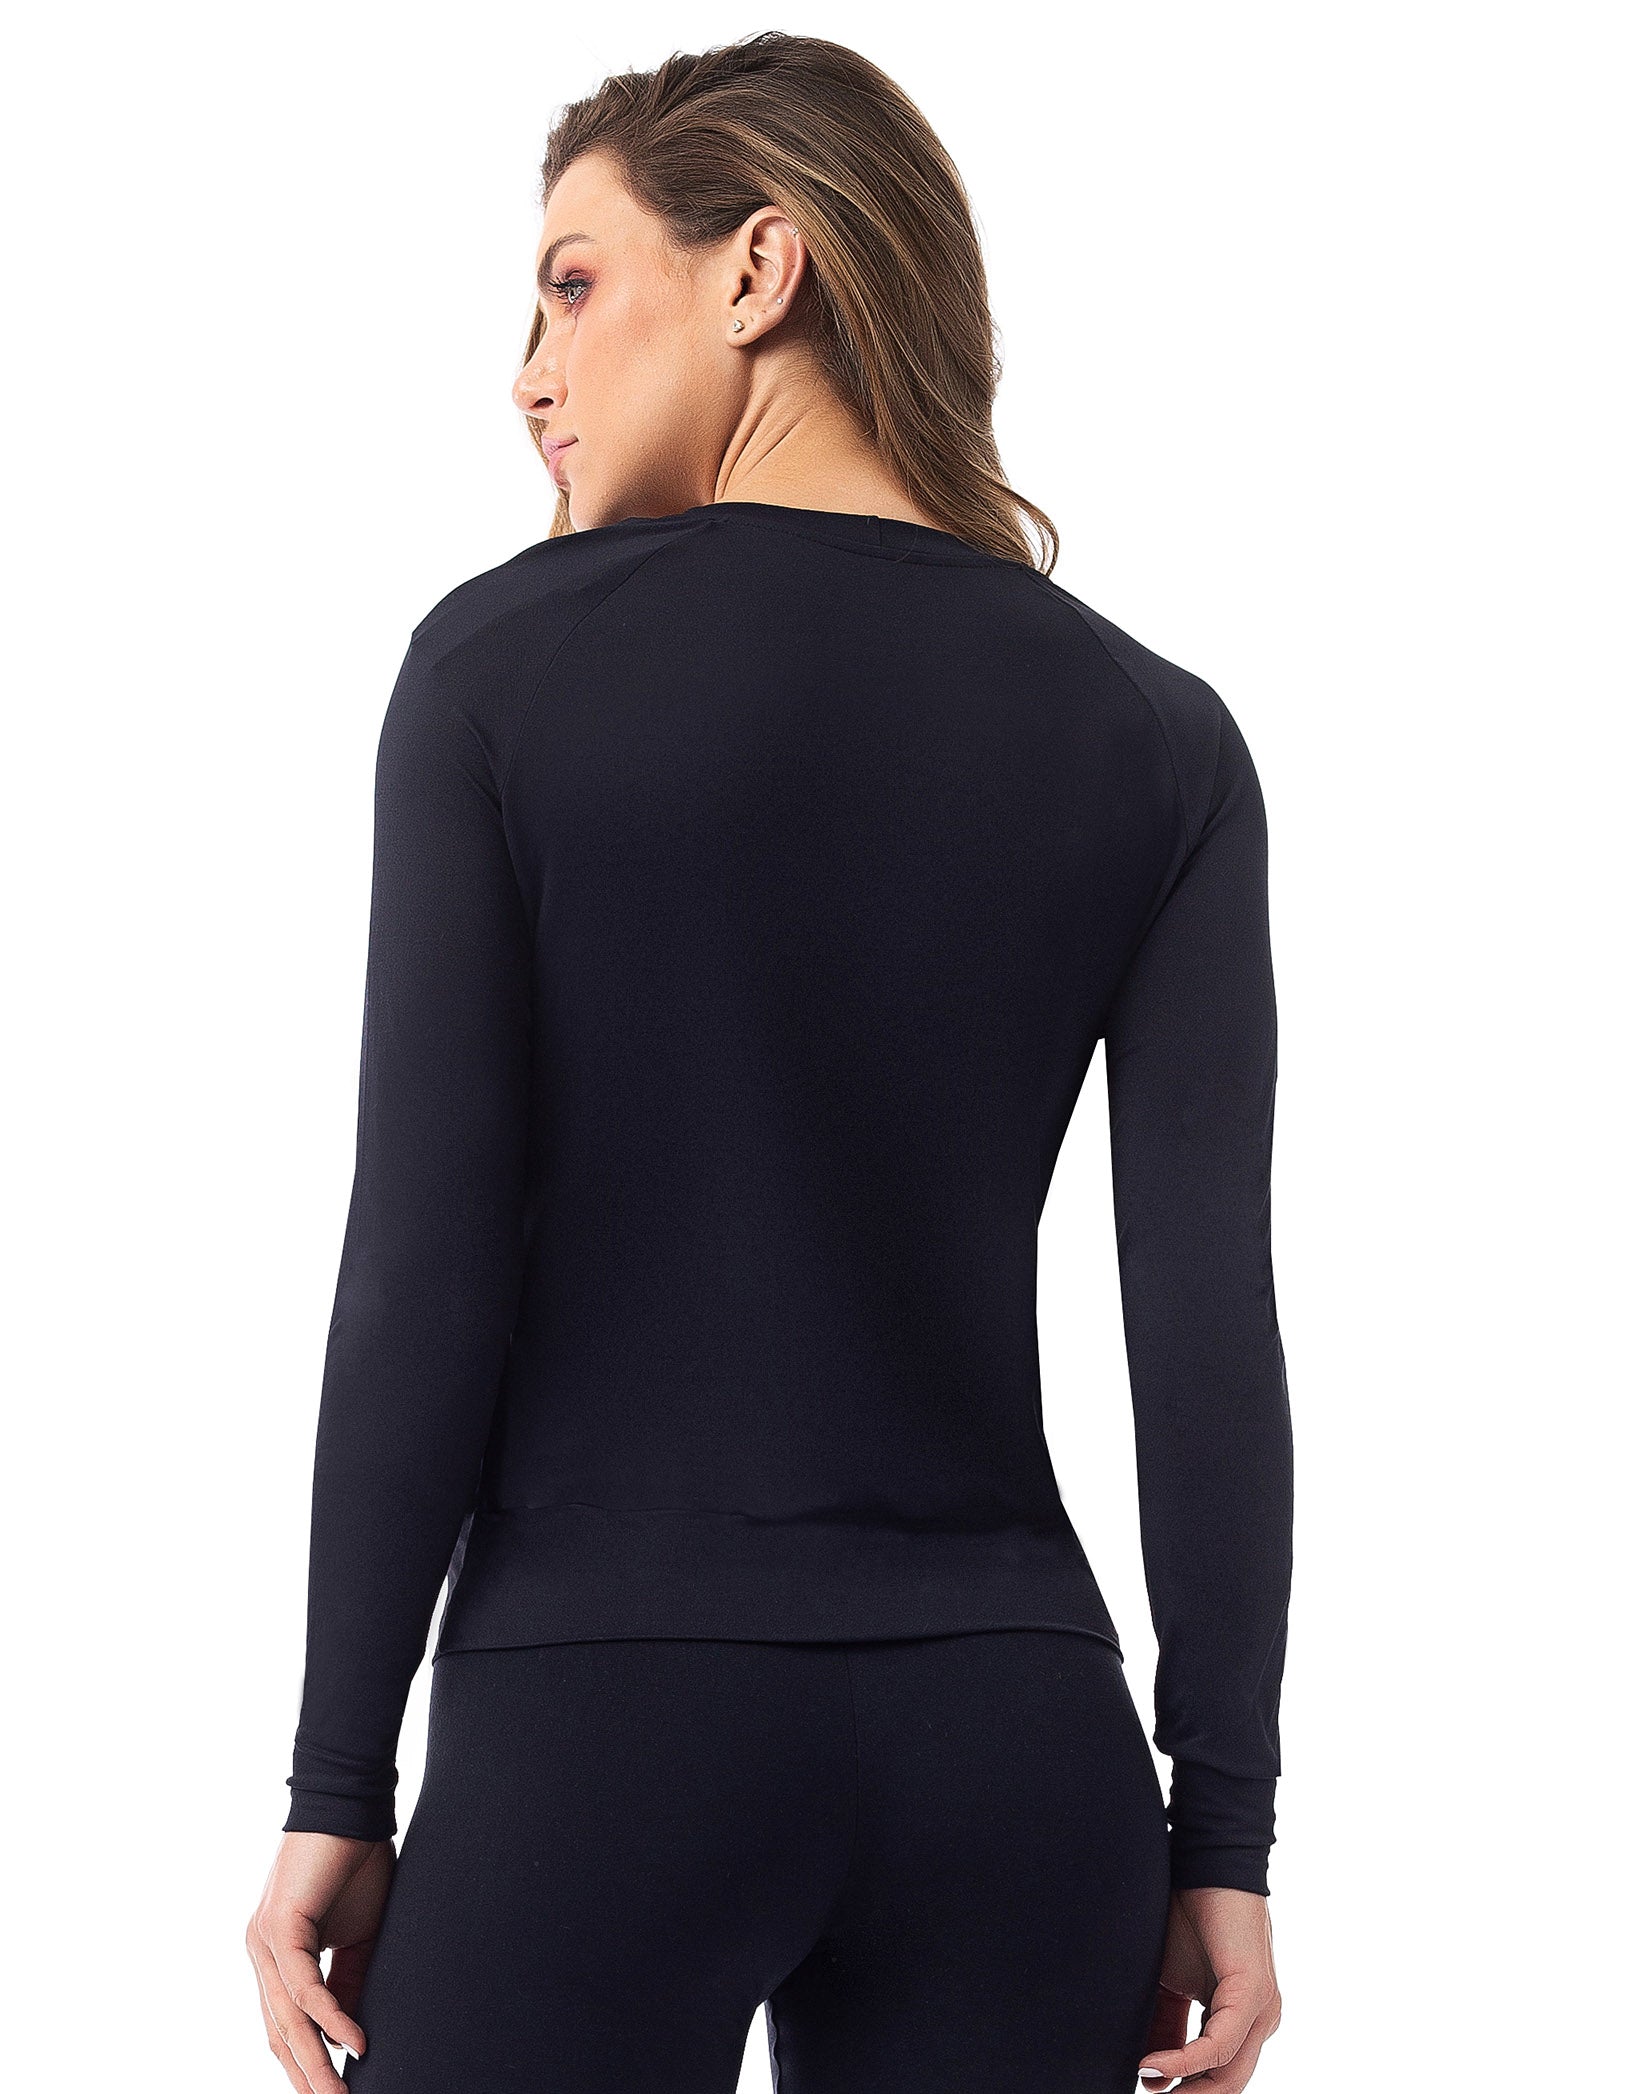 Vestem - Shirt Dry Fit Long Sleeve Soul Black - BML155.C0002